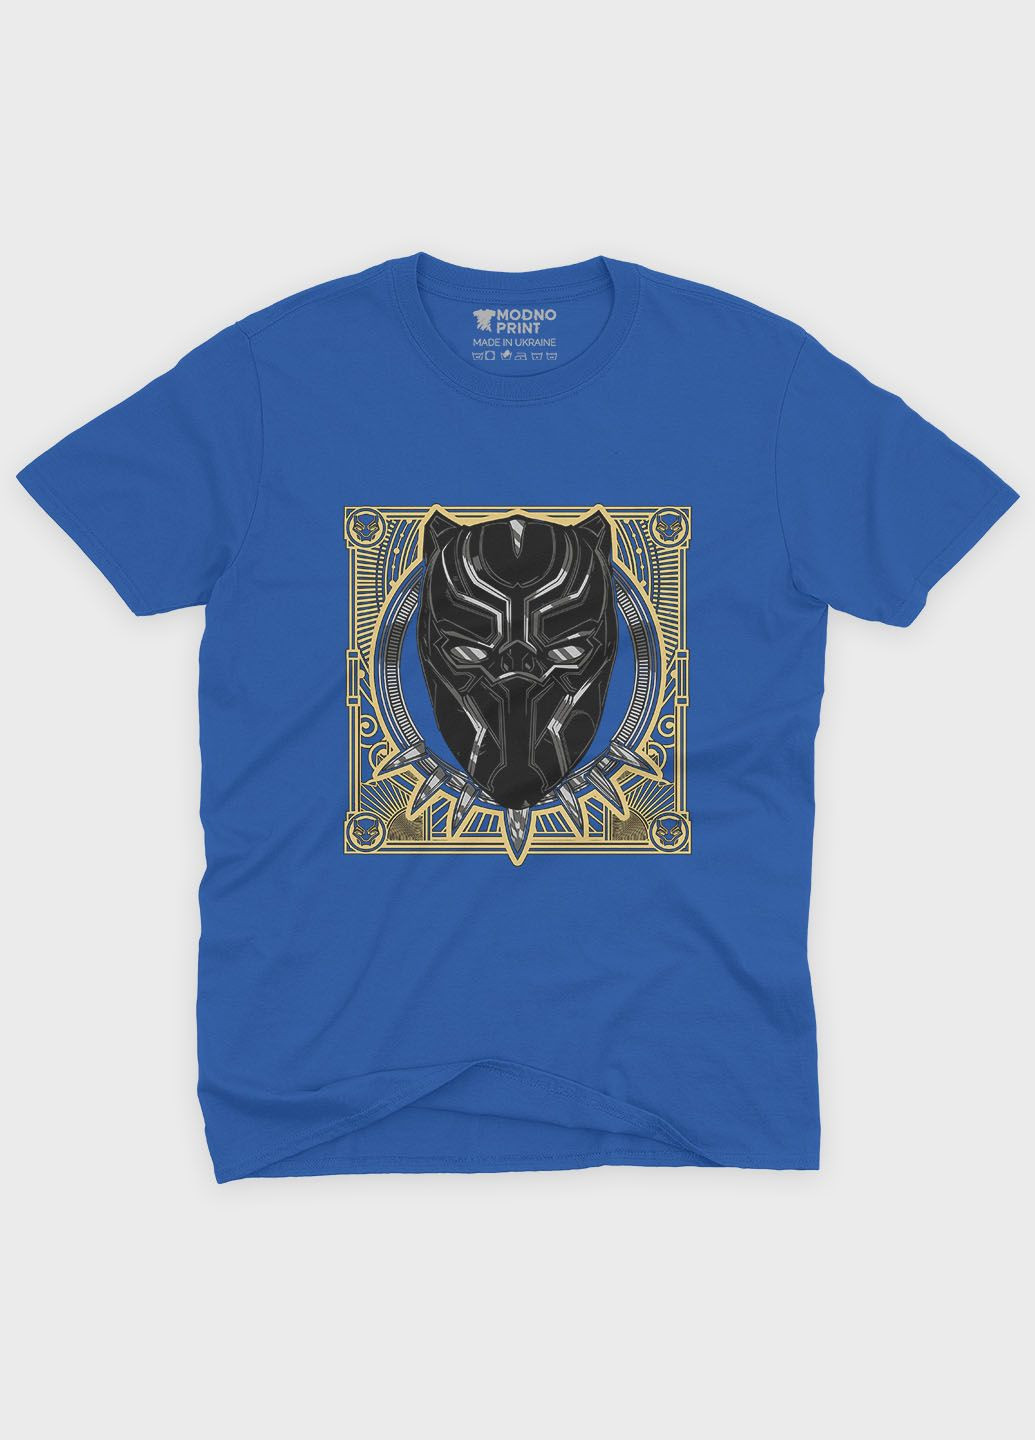 Синя демісезонна футболка для хлопчика з принтом супергероя - чорна пантера (ts001-1-brr-006-027-003-b) Modno